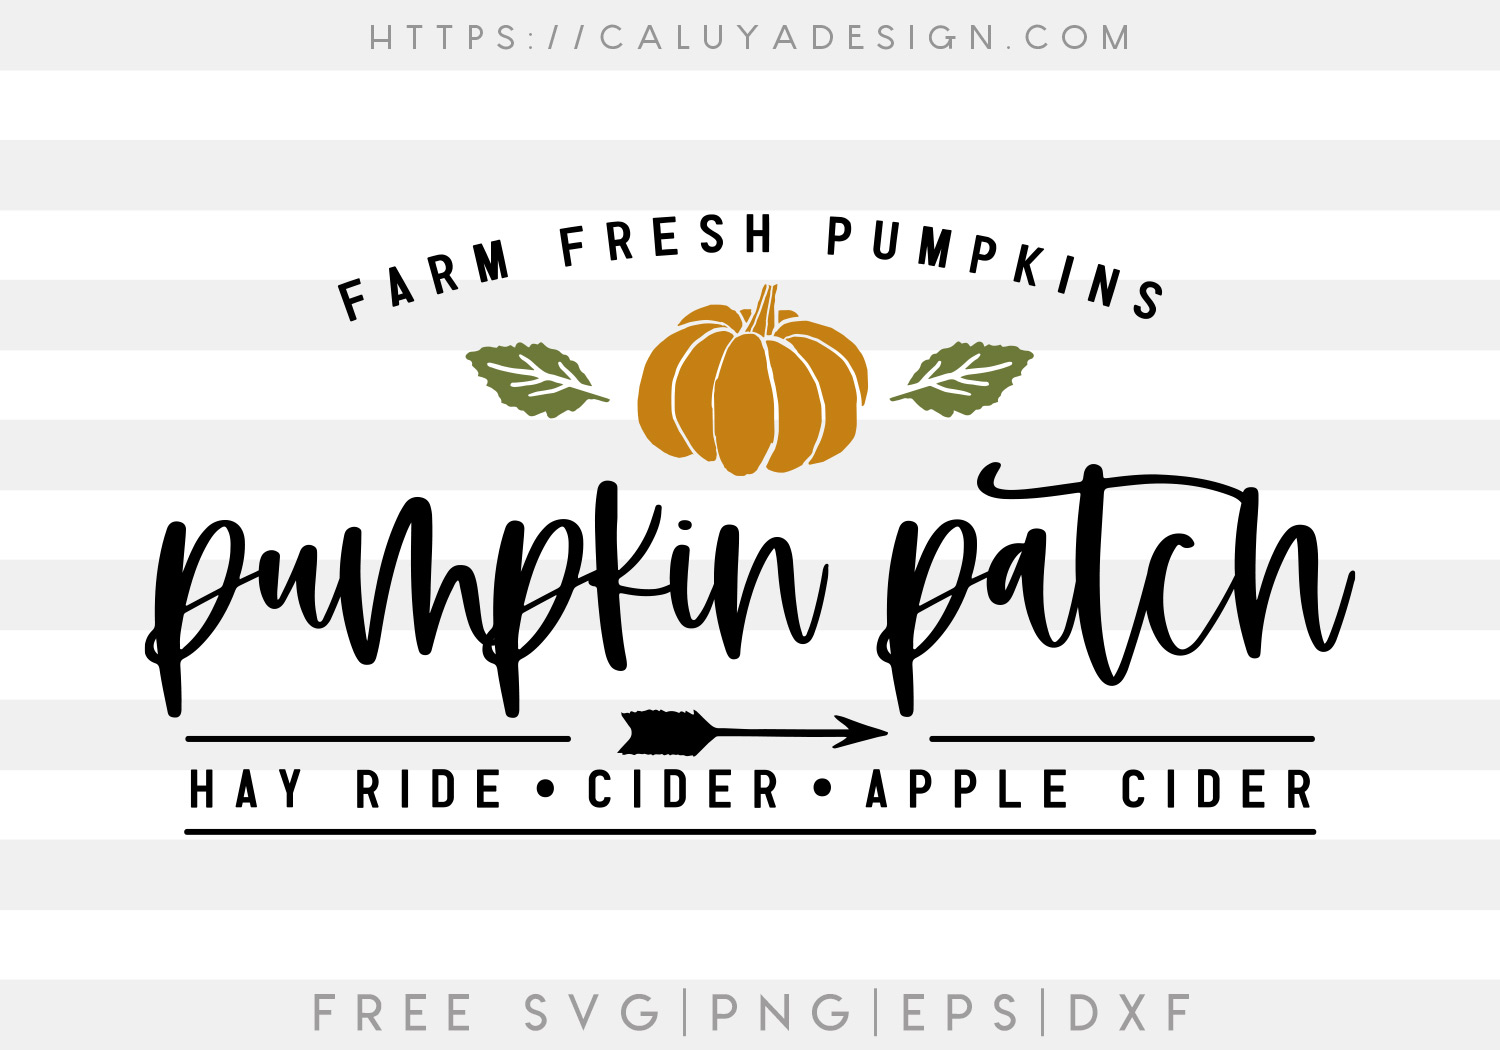 Pumpkin Patch Sign SVG, PNG, EPS & DXF